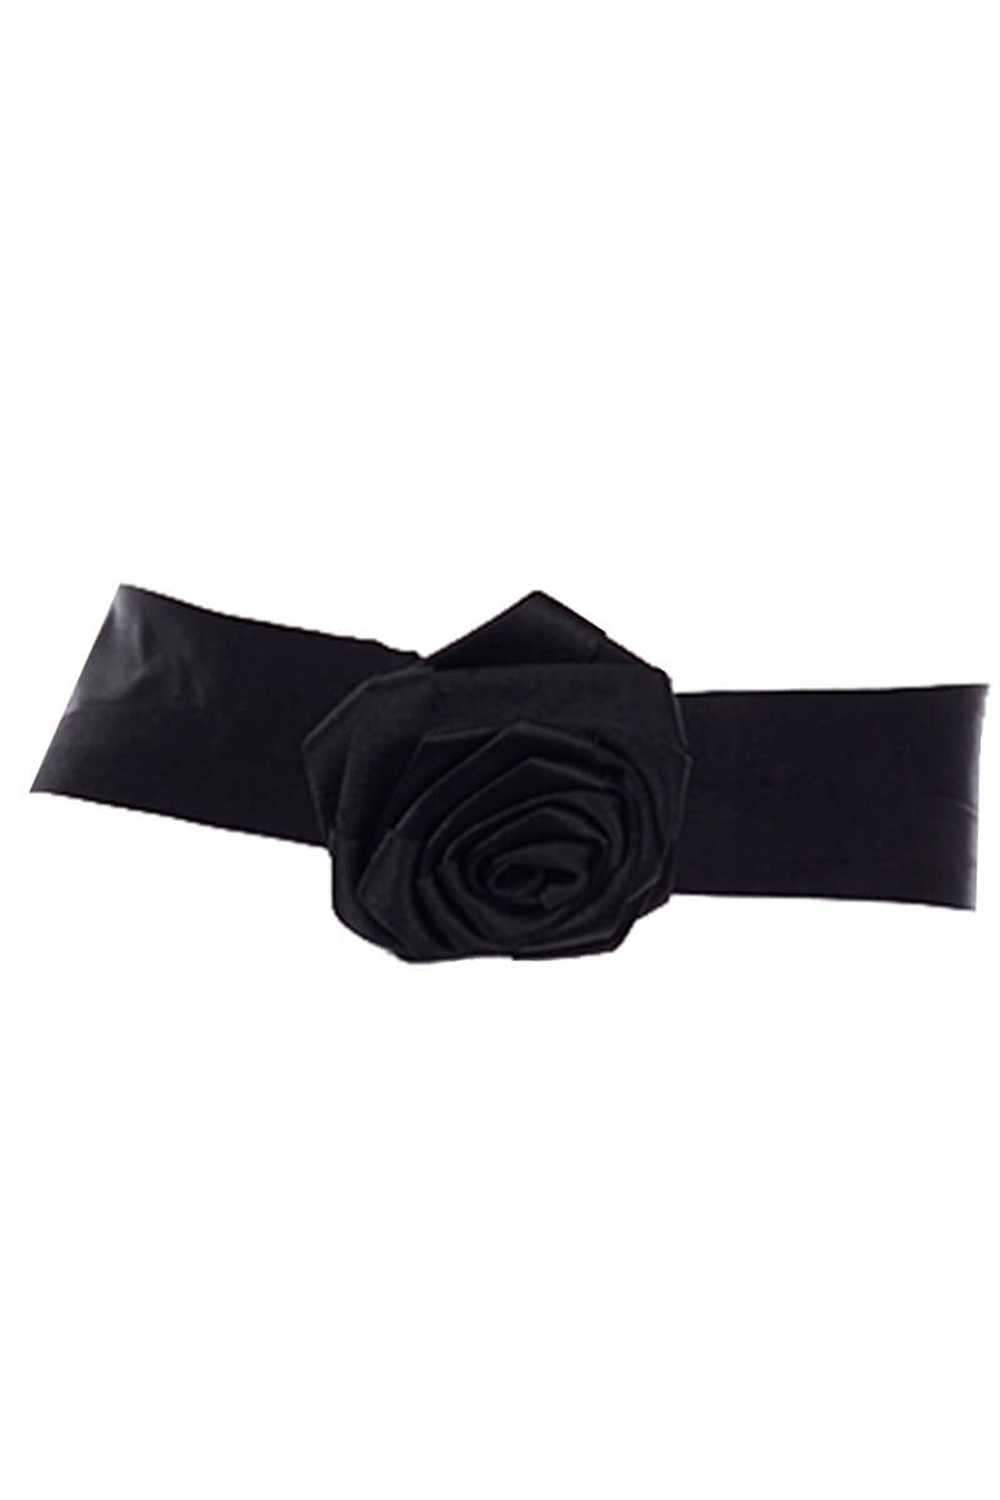 1990s Donna Karan Black Silk Satin Rose Belt - image 3